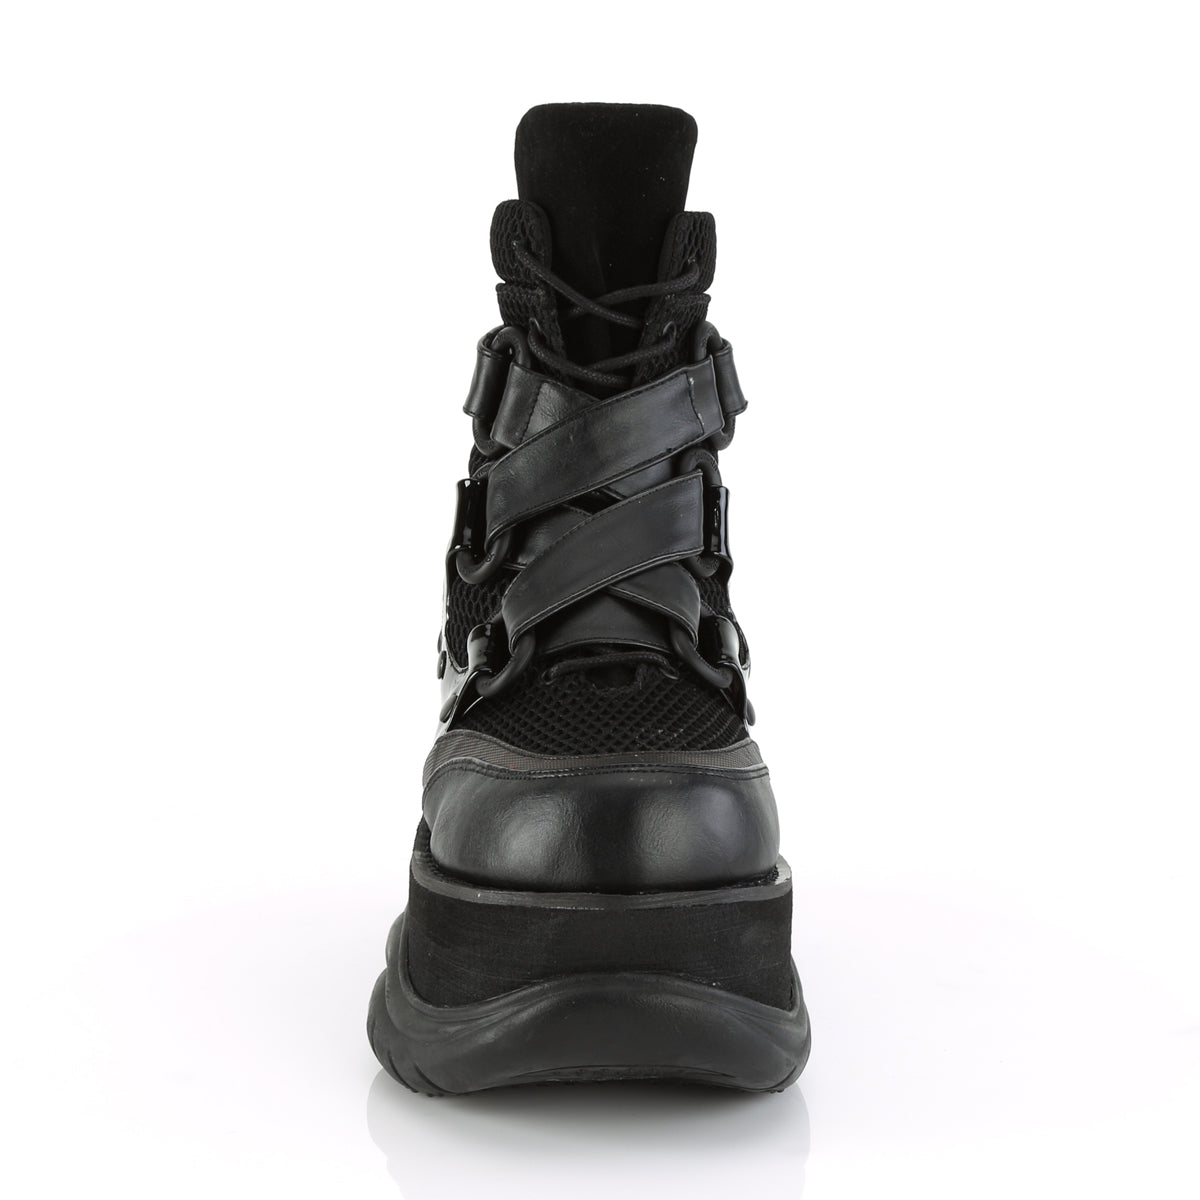 NEPTUNE-126 Black Vegan Leather-Fishnet Fabric-Patent Ankle Boot Demonia